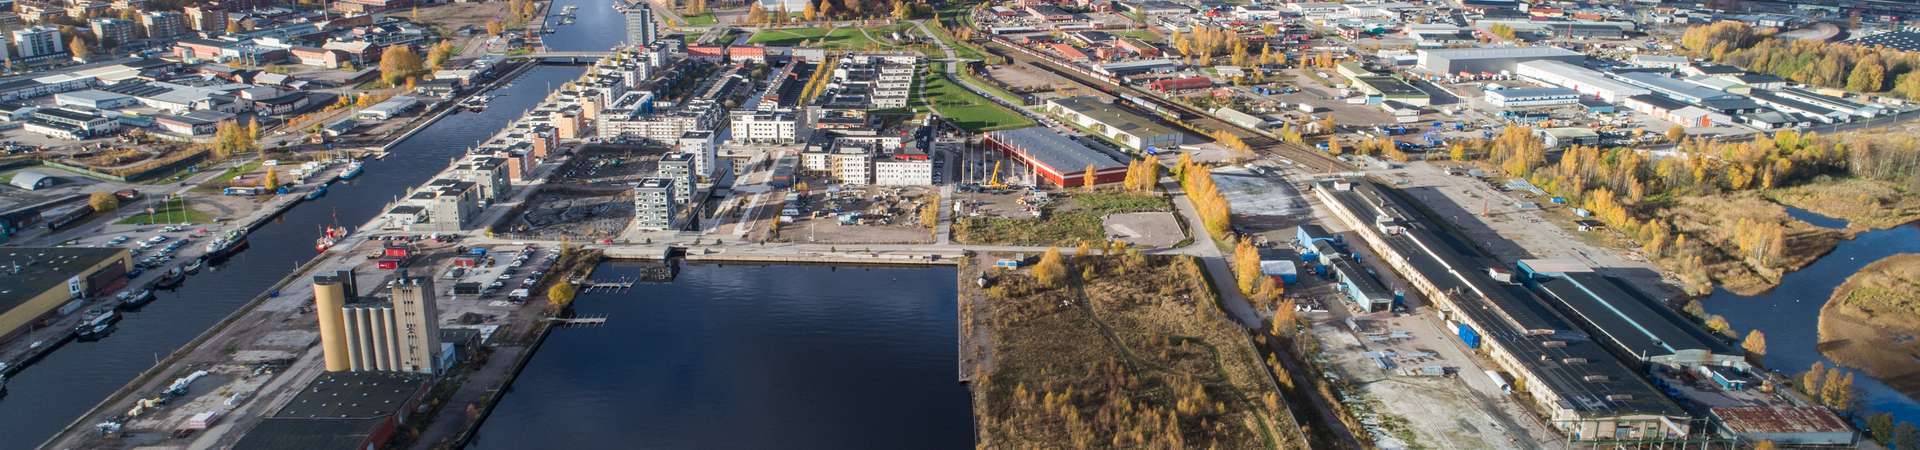 Gävle: Näringen - One of Europe's most sustainable neighborhoods